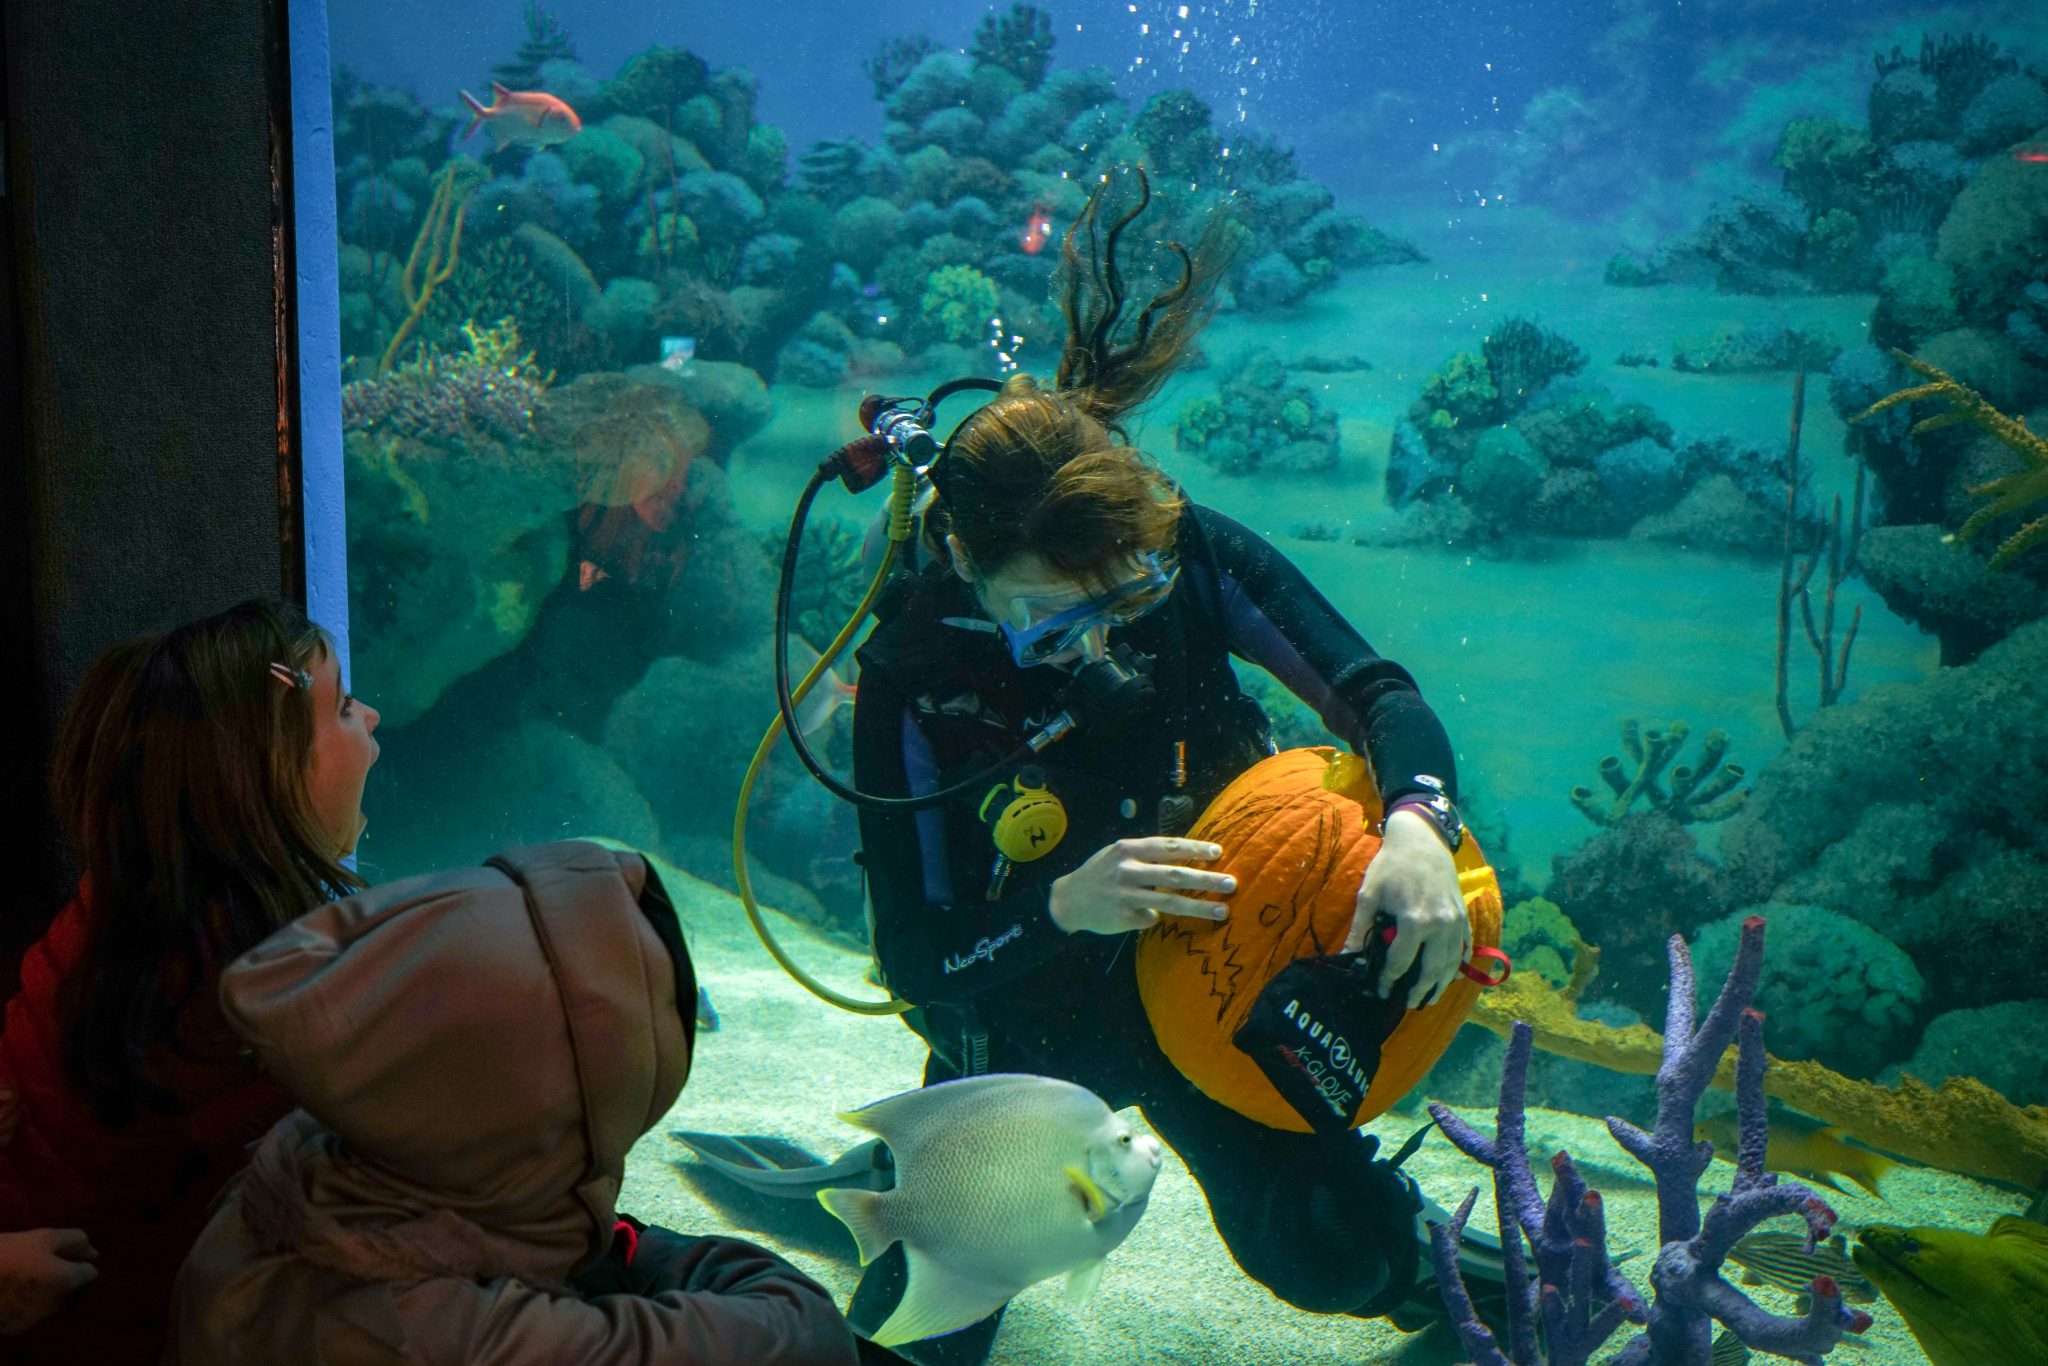 A scuba-suited woman observing fish in an aquarium.